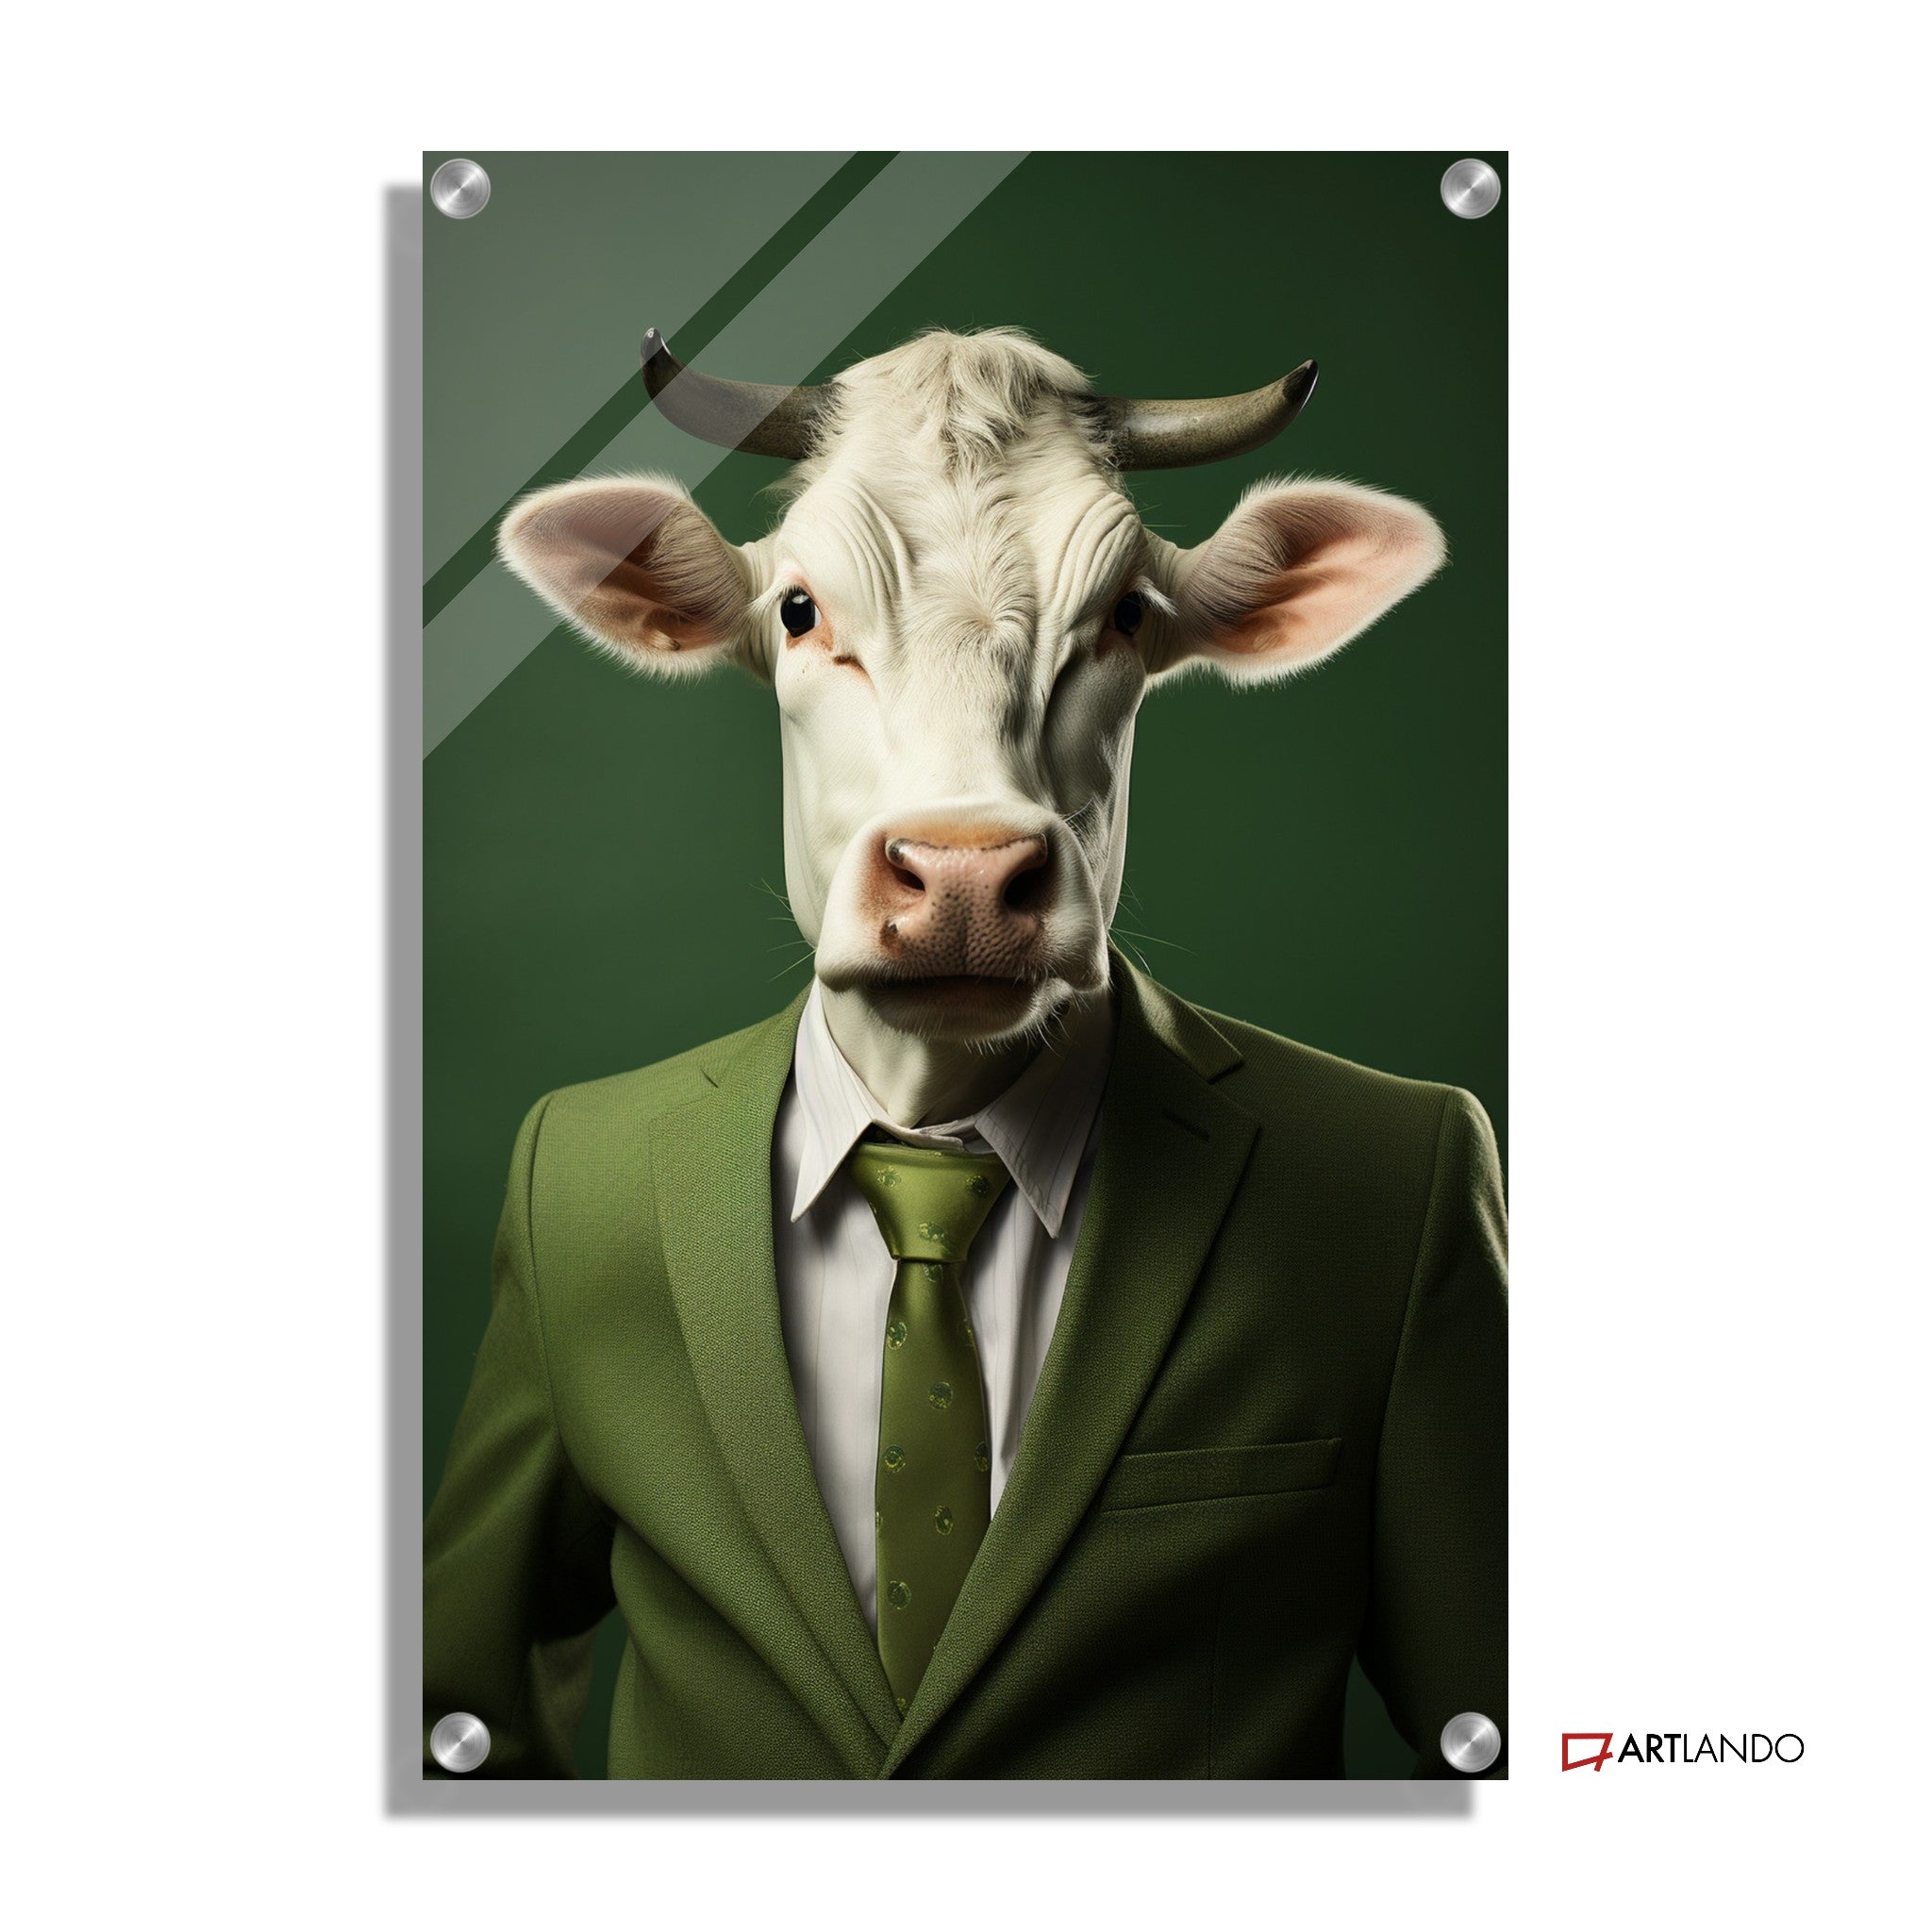 Kuh als Geschäftsmann in grünem Anzug